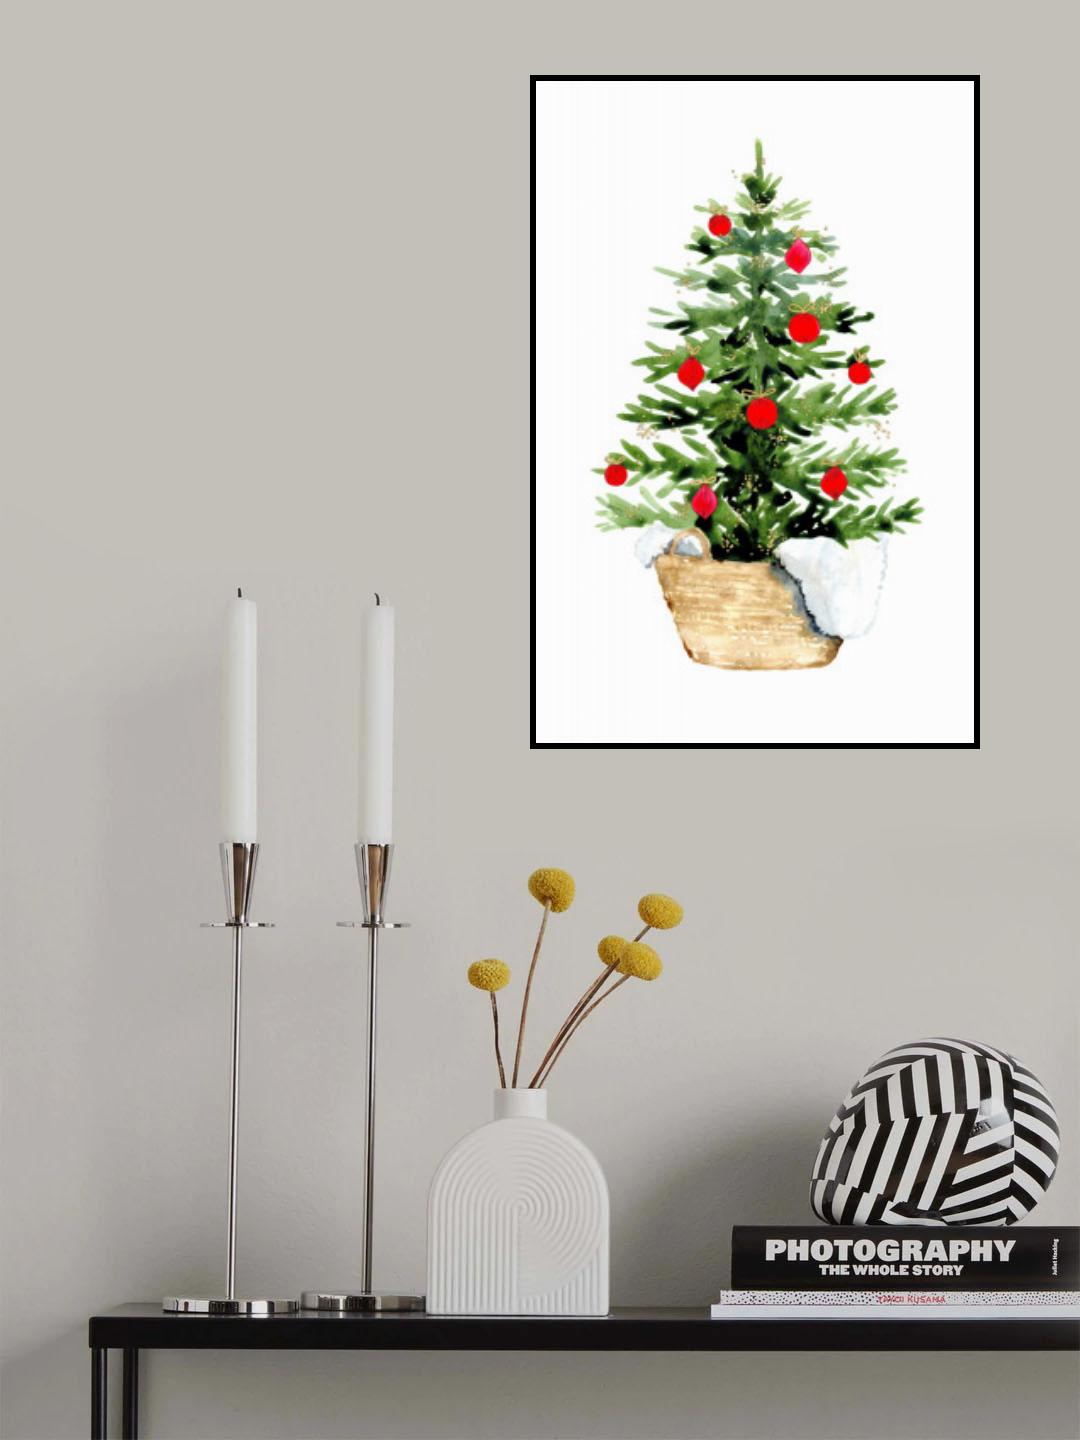 Cozy watercolor Christmas tree Poster och Canvastavla